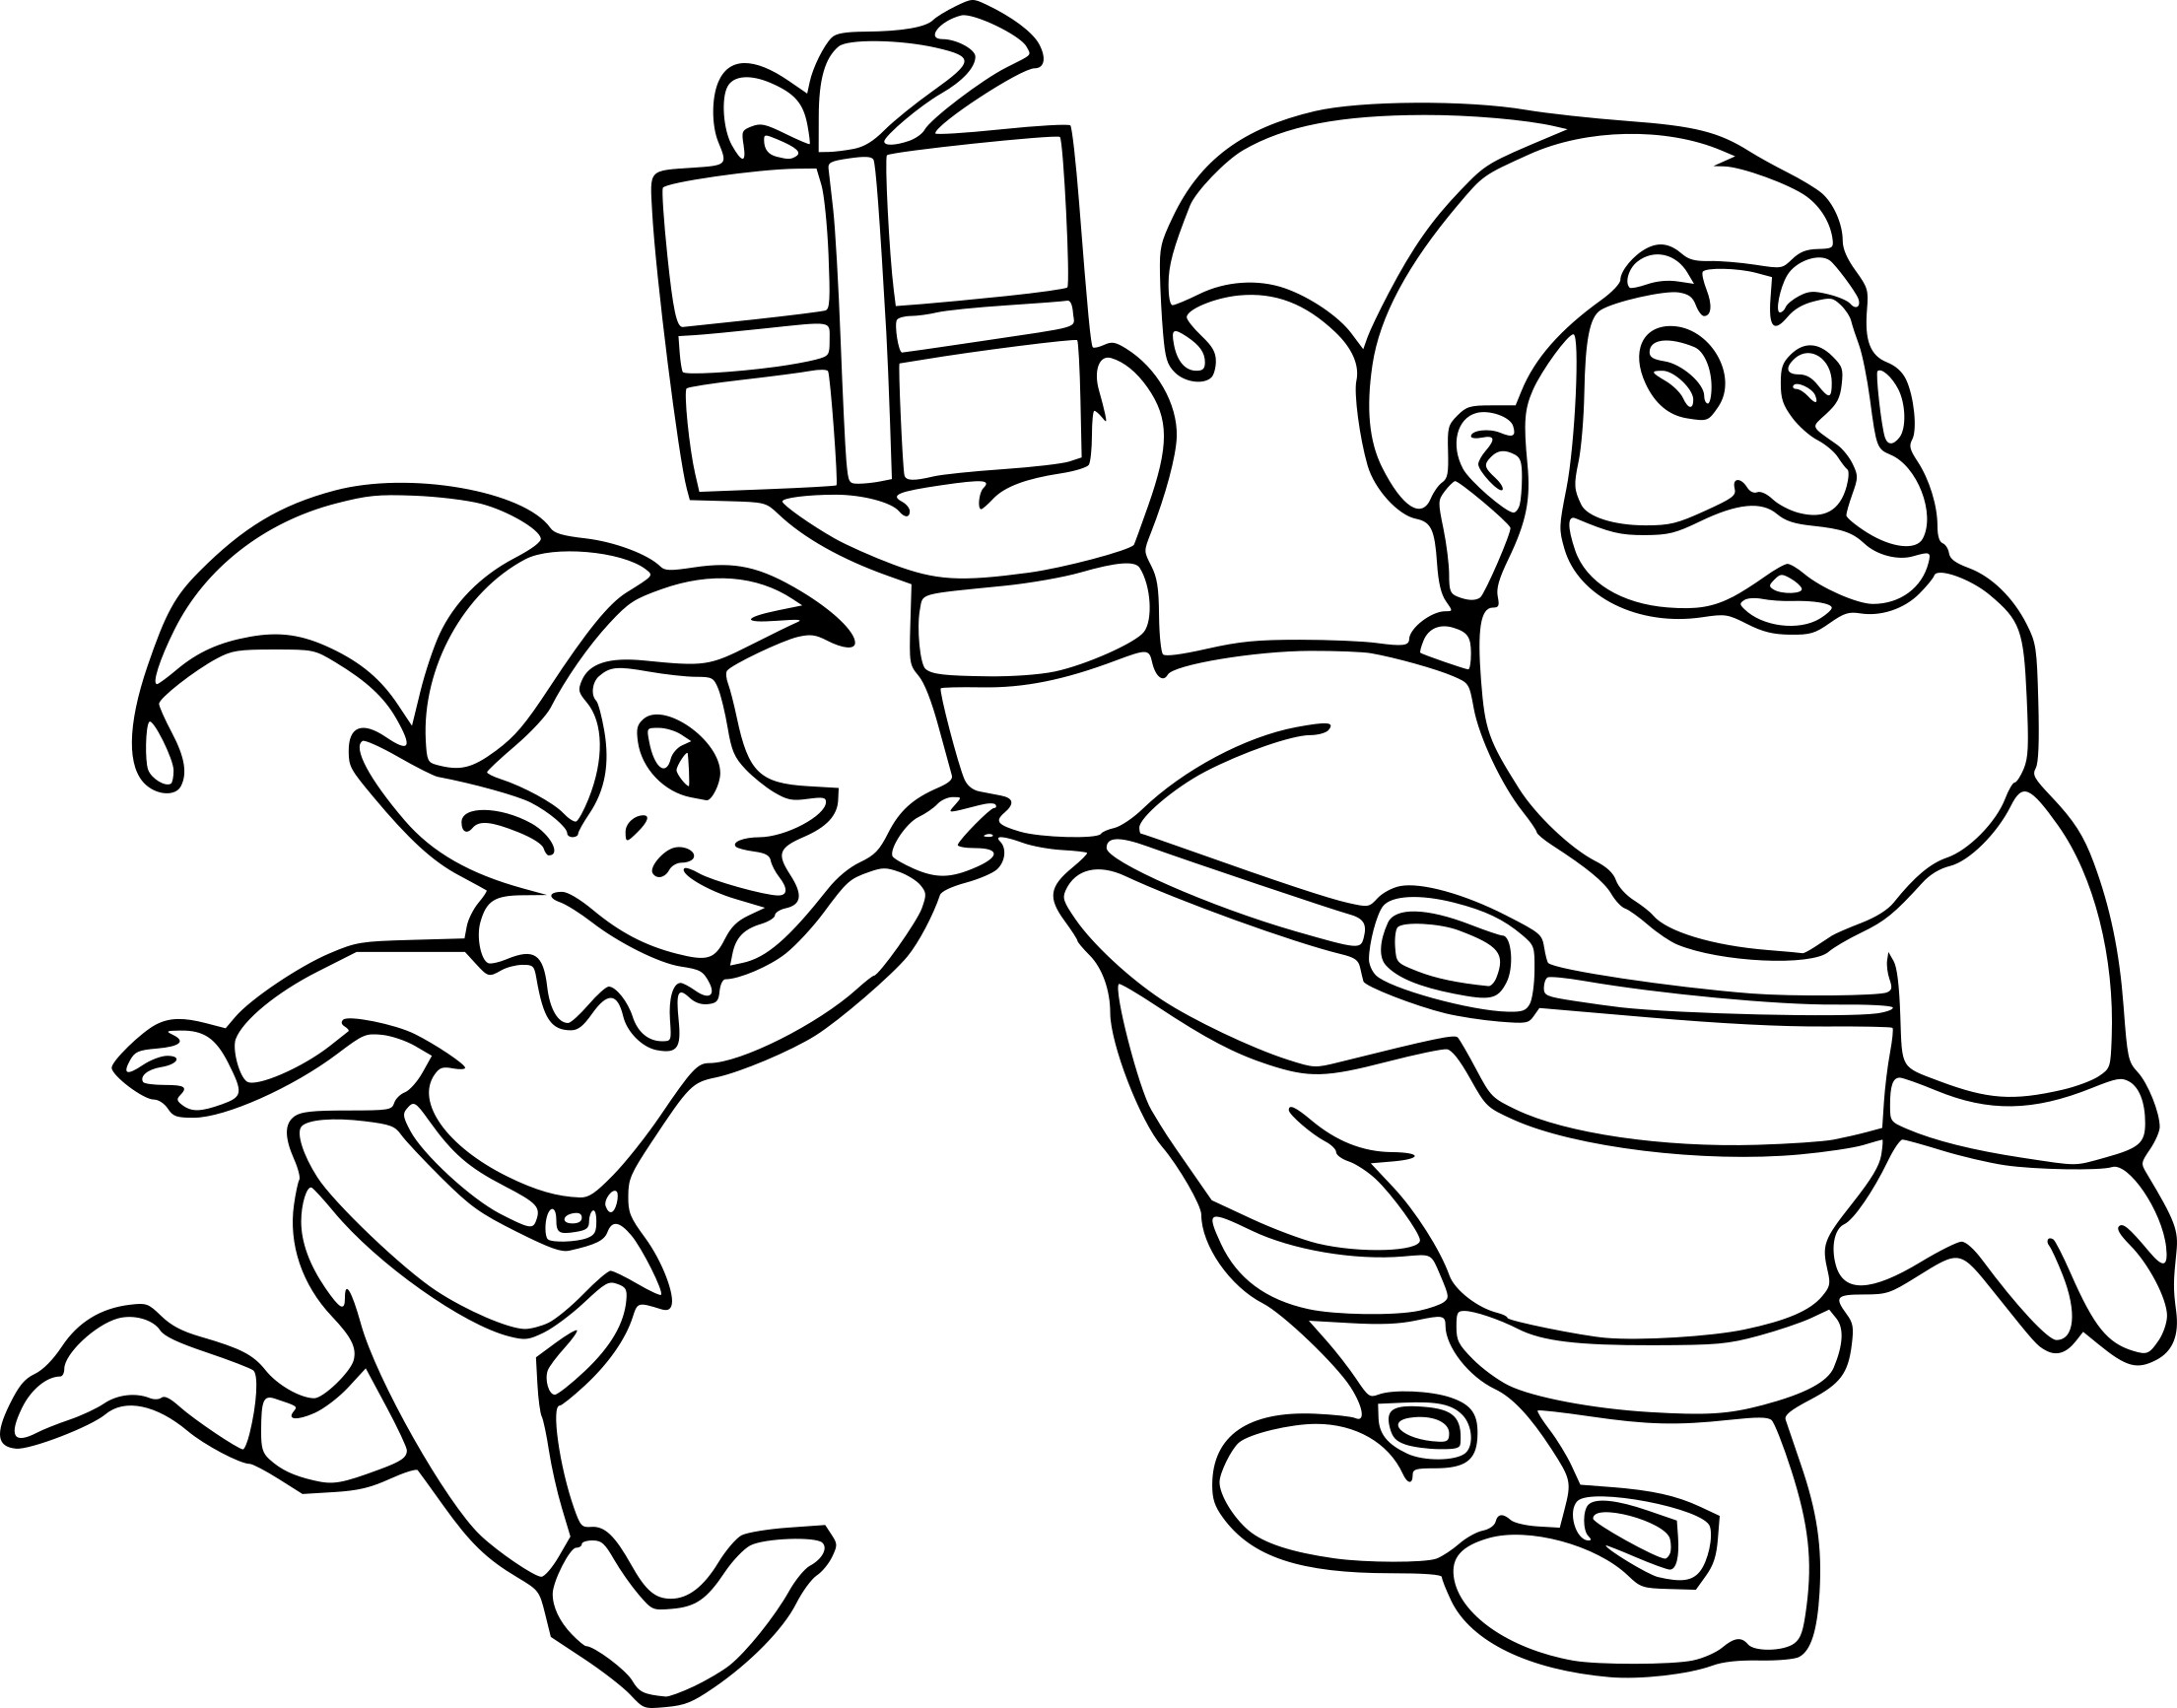 Elf And Santa Claus coloring page